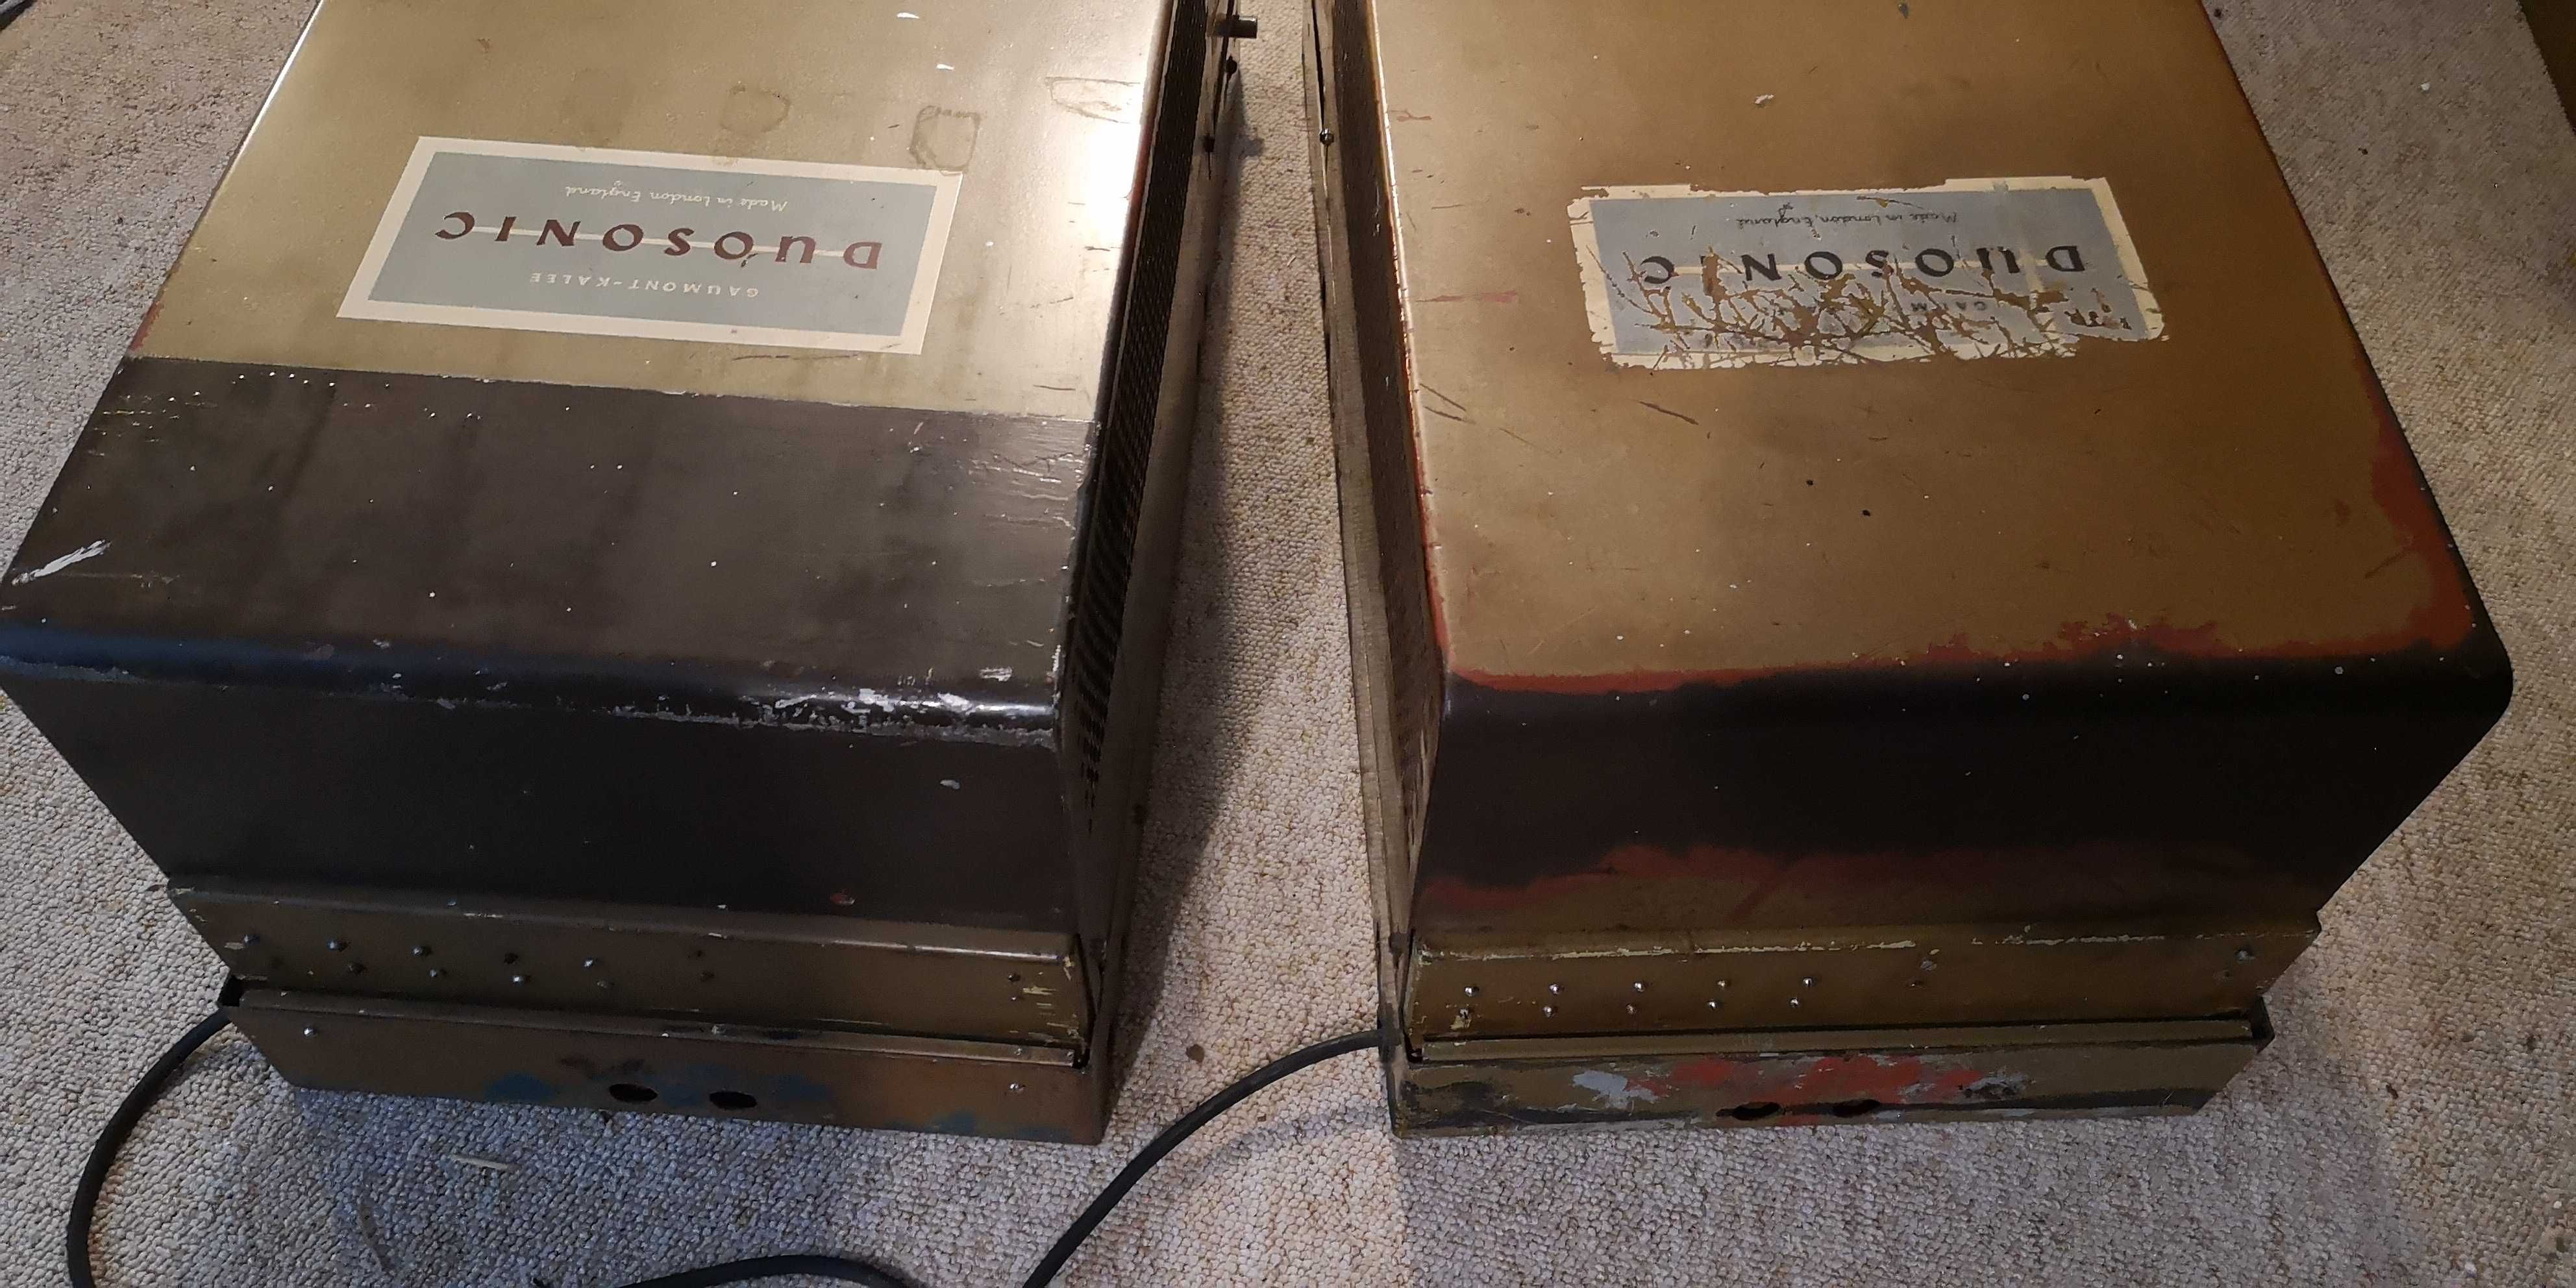 Vintage valvulas KT66 amplifiers